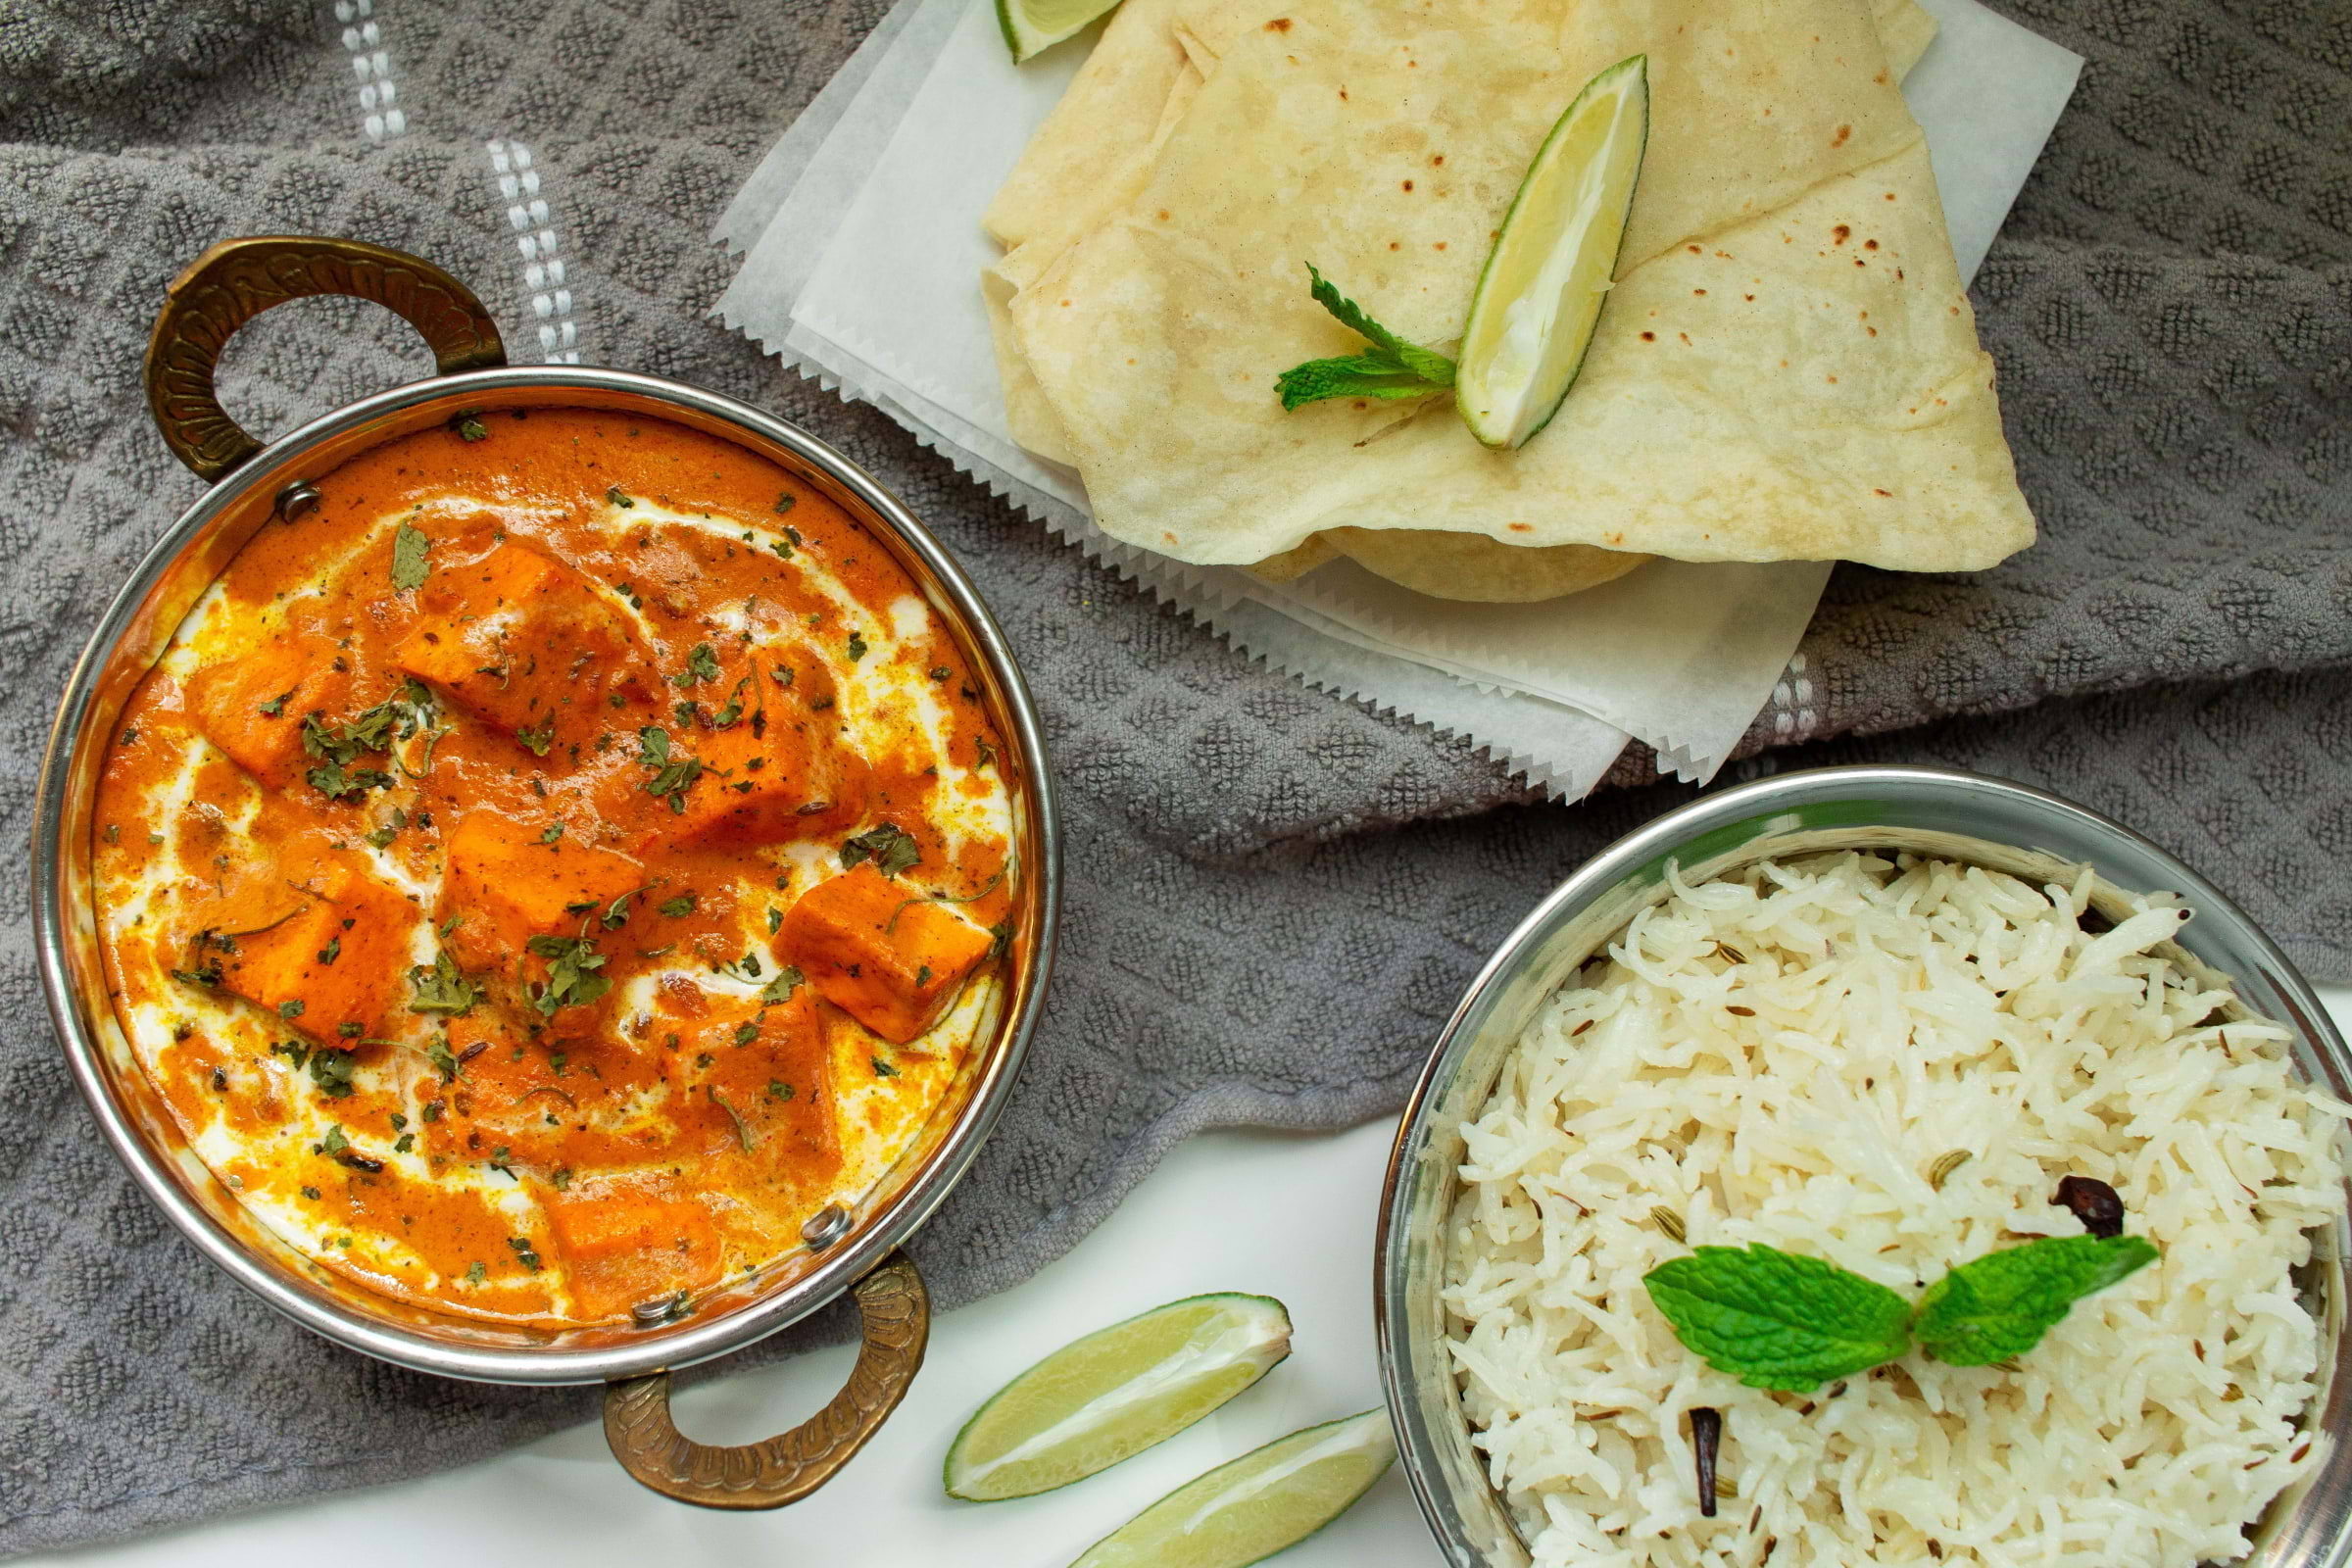 The best Indian restaurants in Manchester